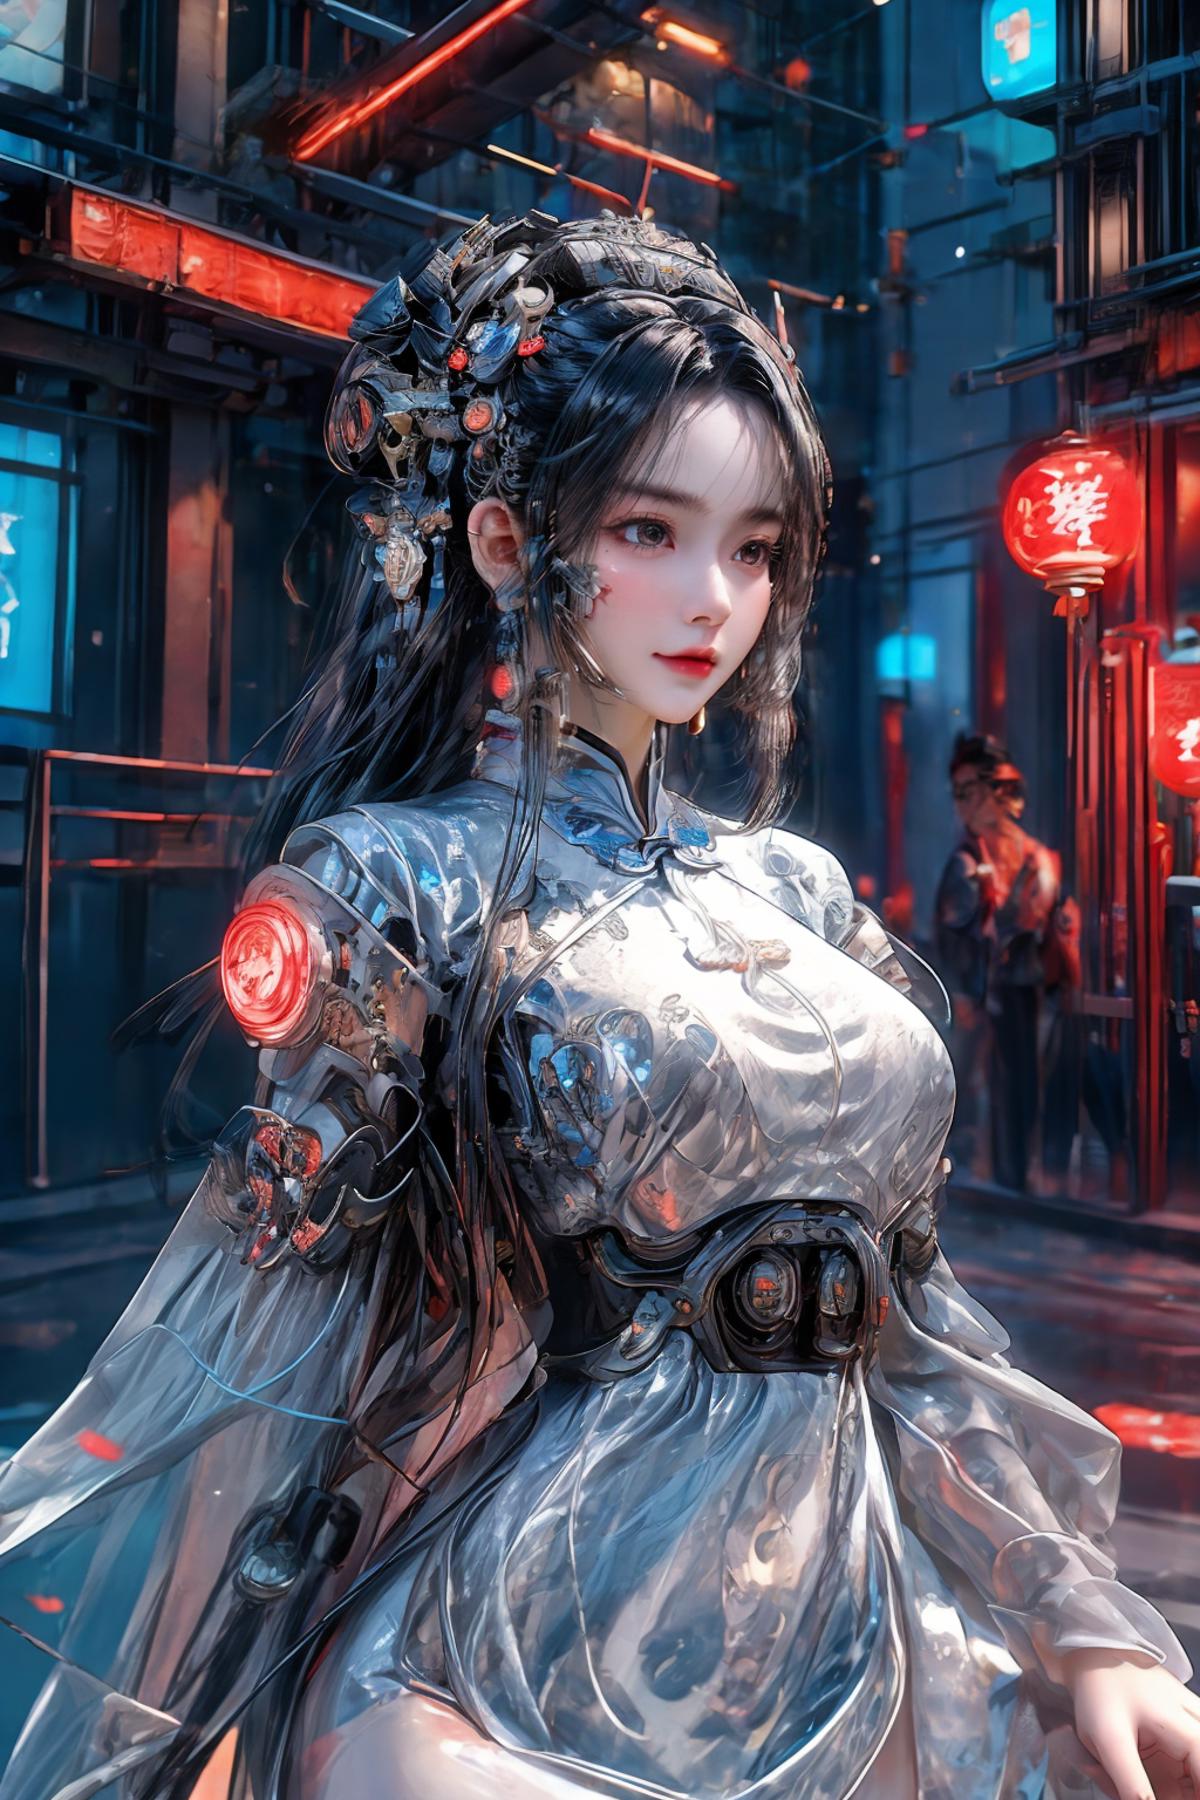 Cyberhanfu 赛博国风/Cyber Chinese style image by satan0106157